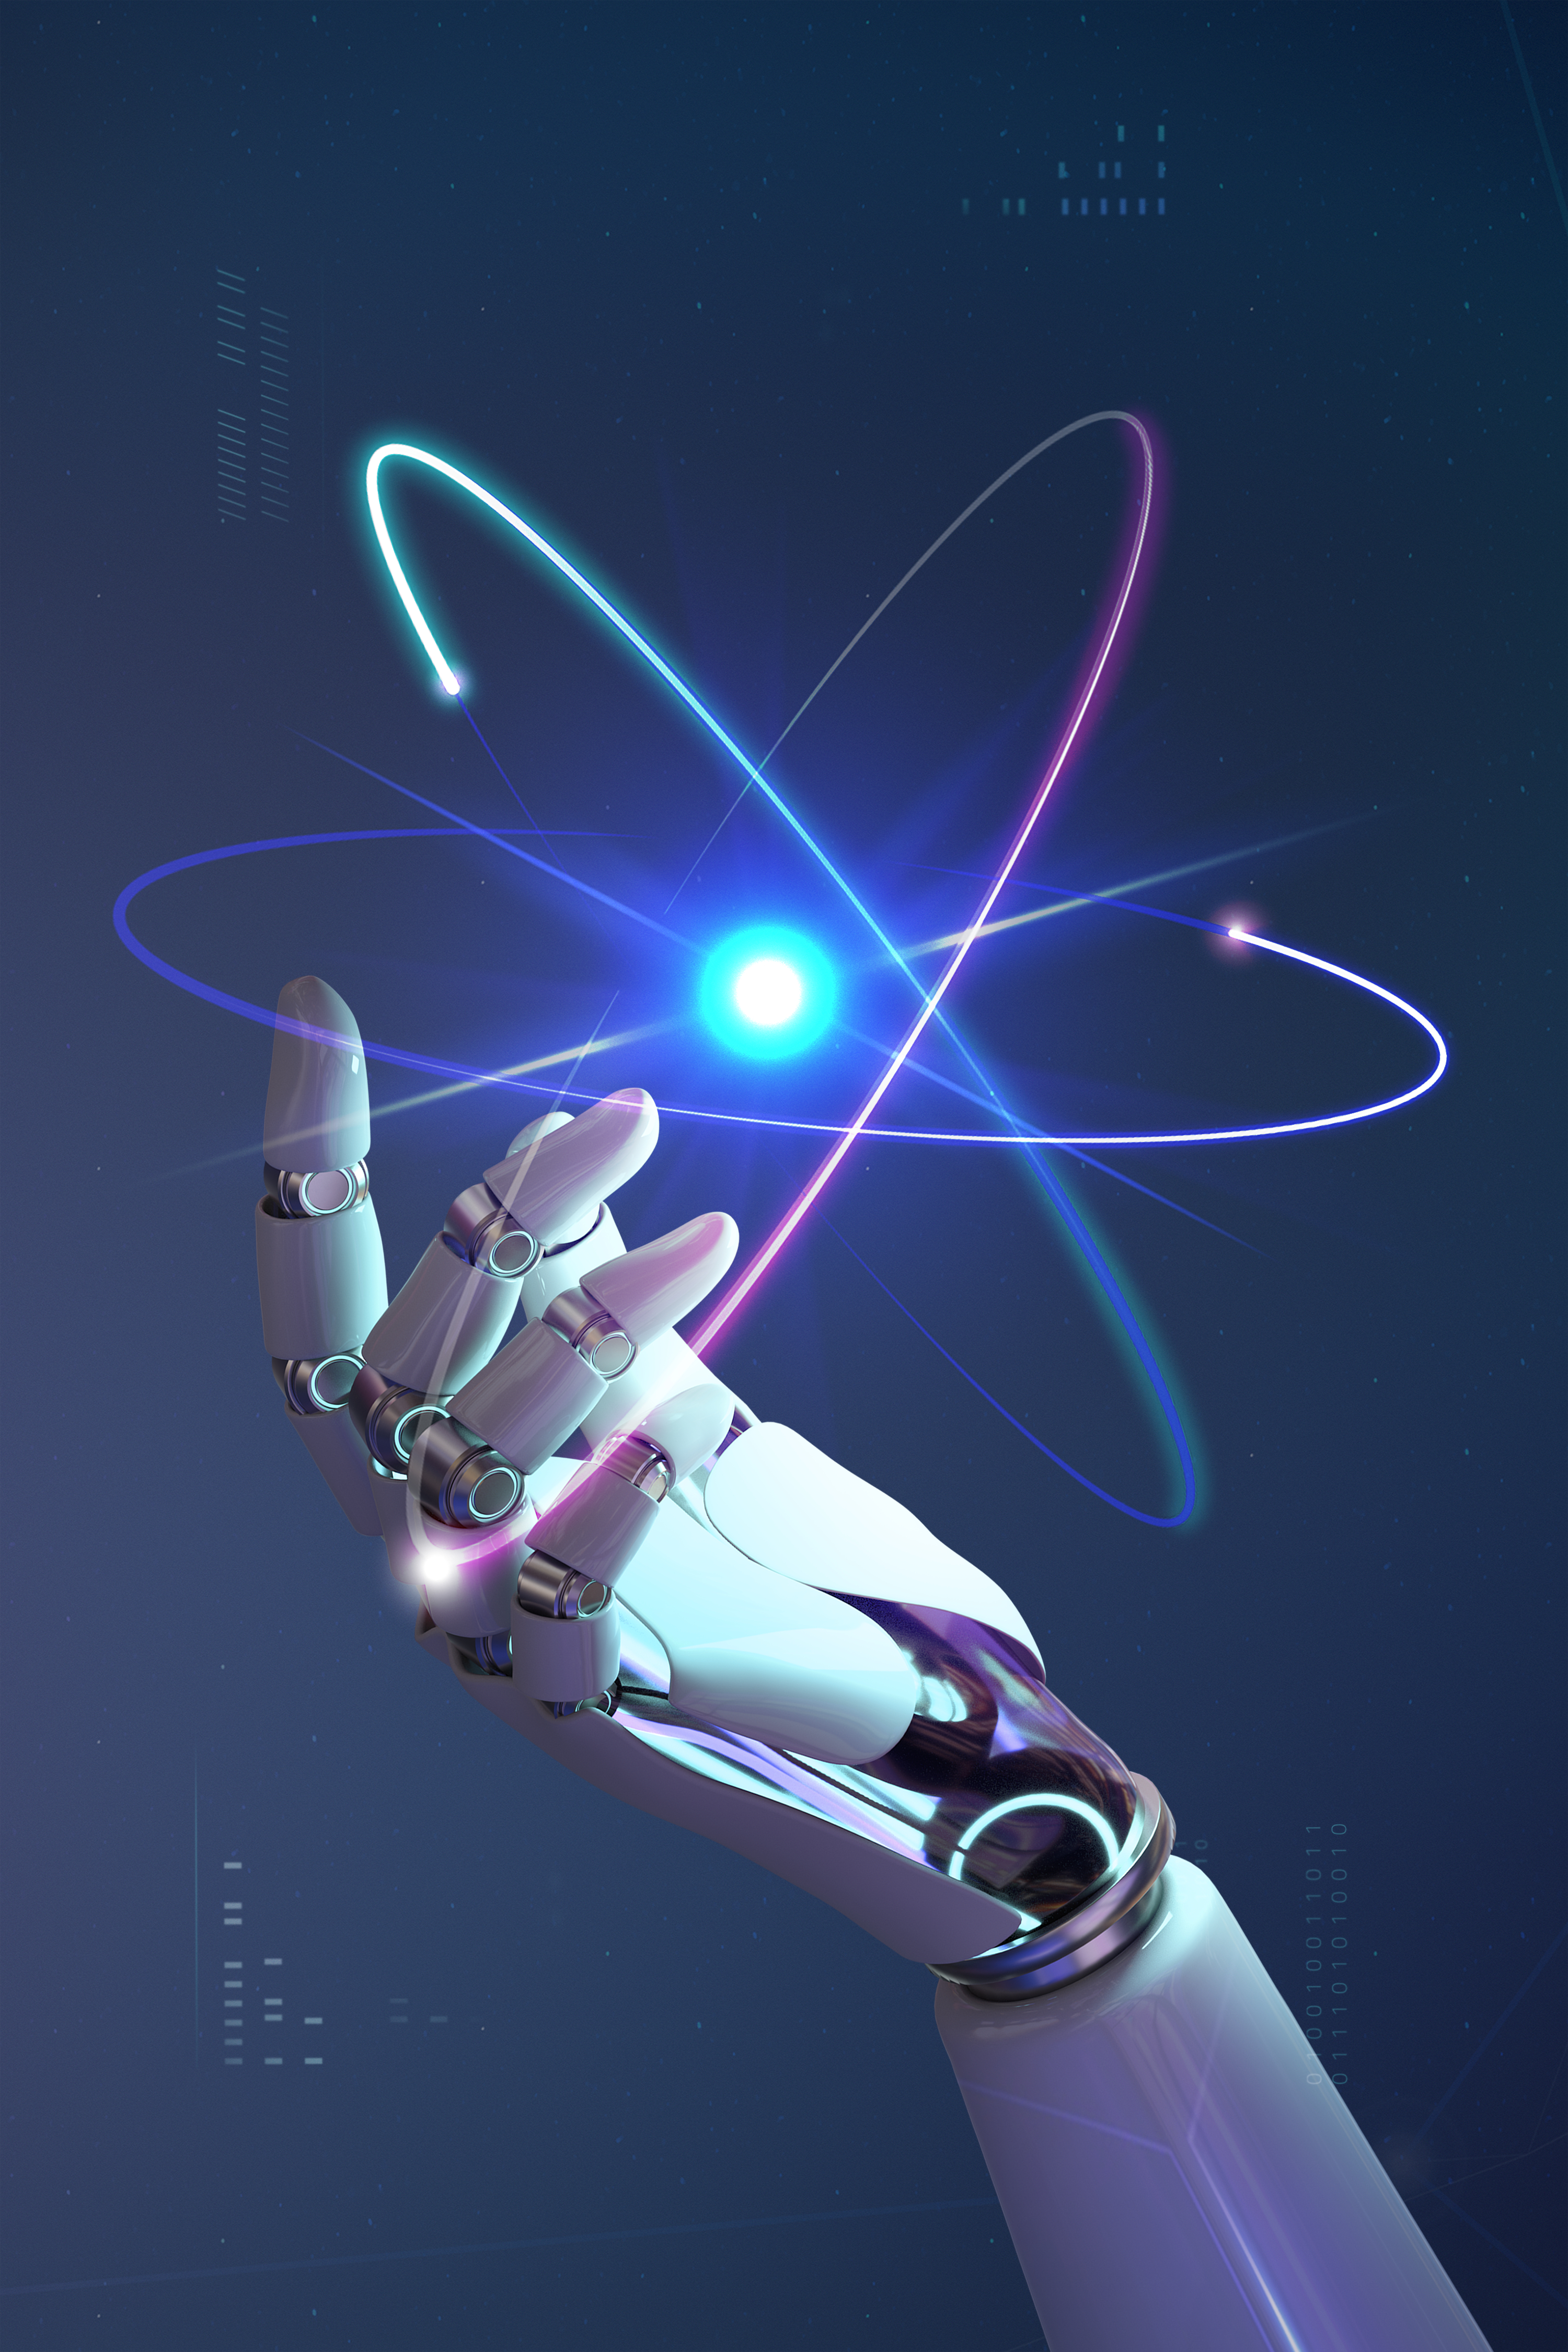 AI nuclear energy, future innovation of disruptive technology